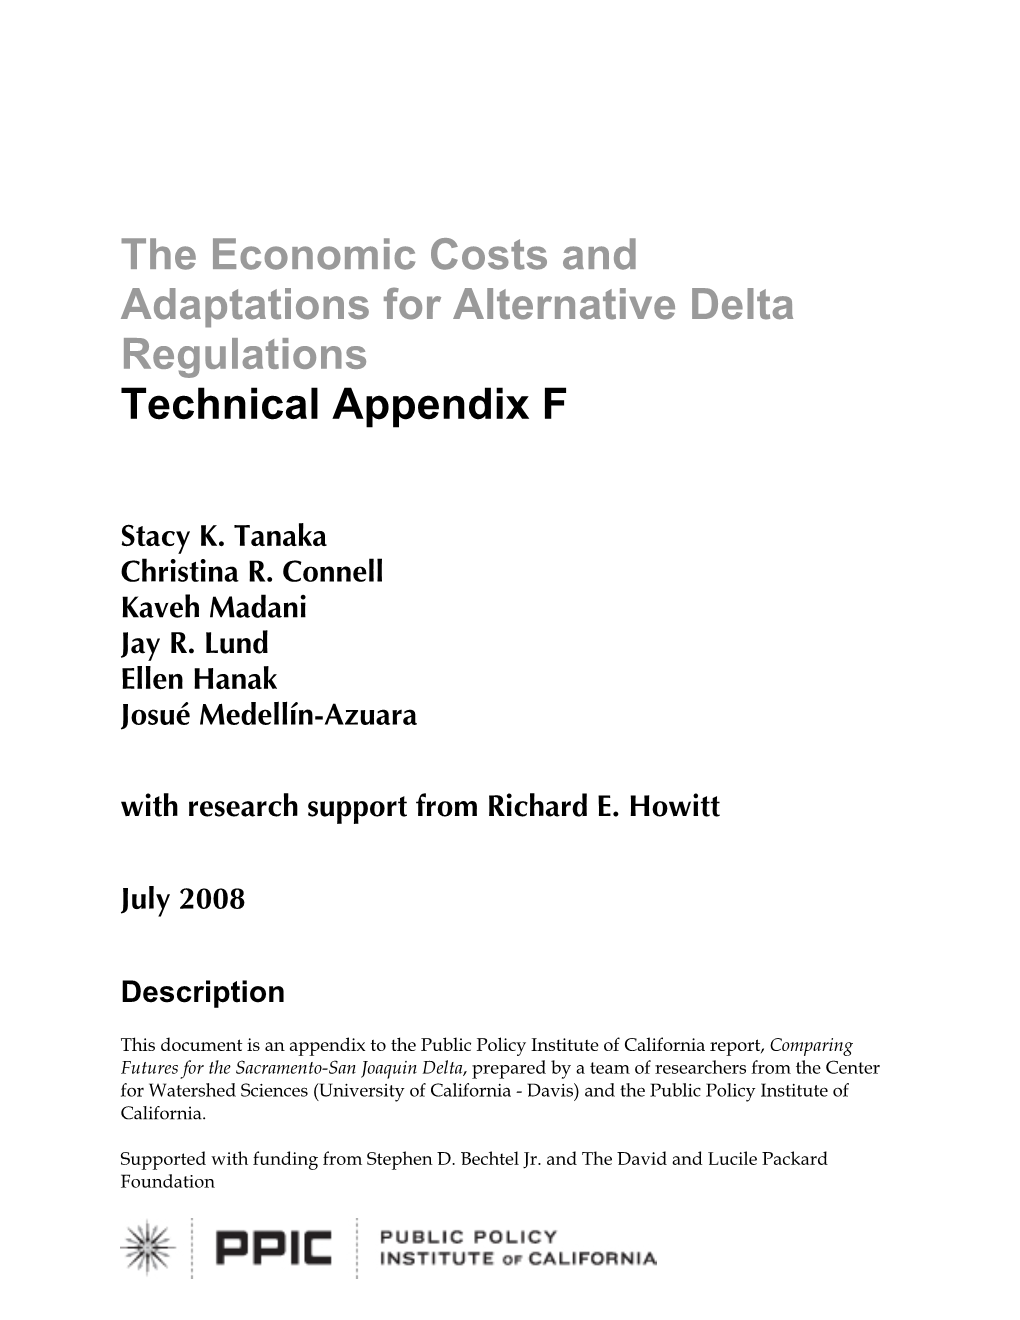 The Economic Costs and Adaptations for Alternative Delta Regulations Technical Appendix F